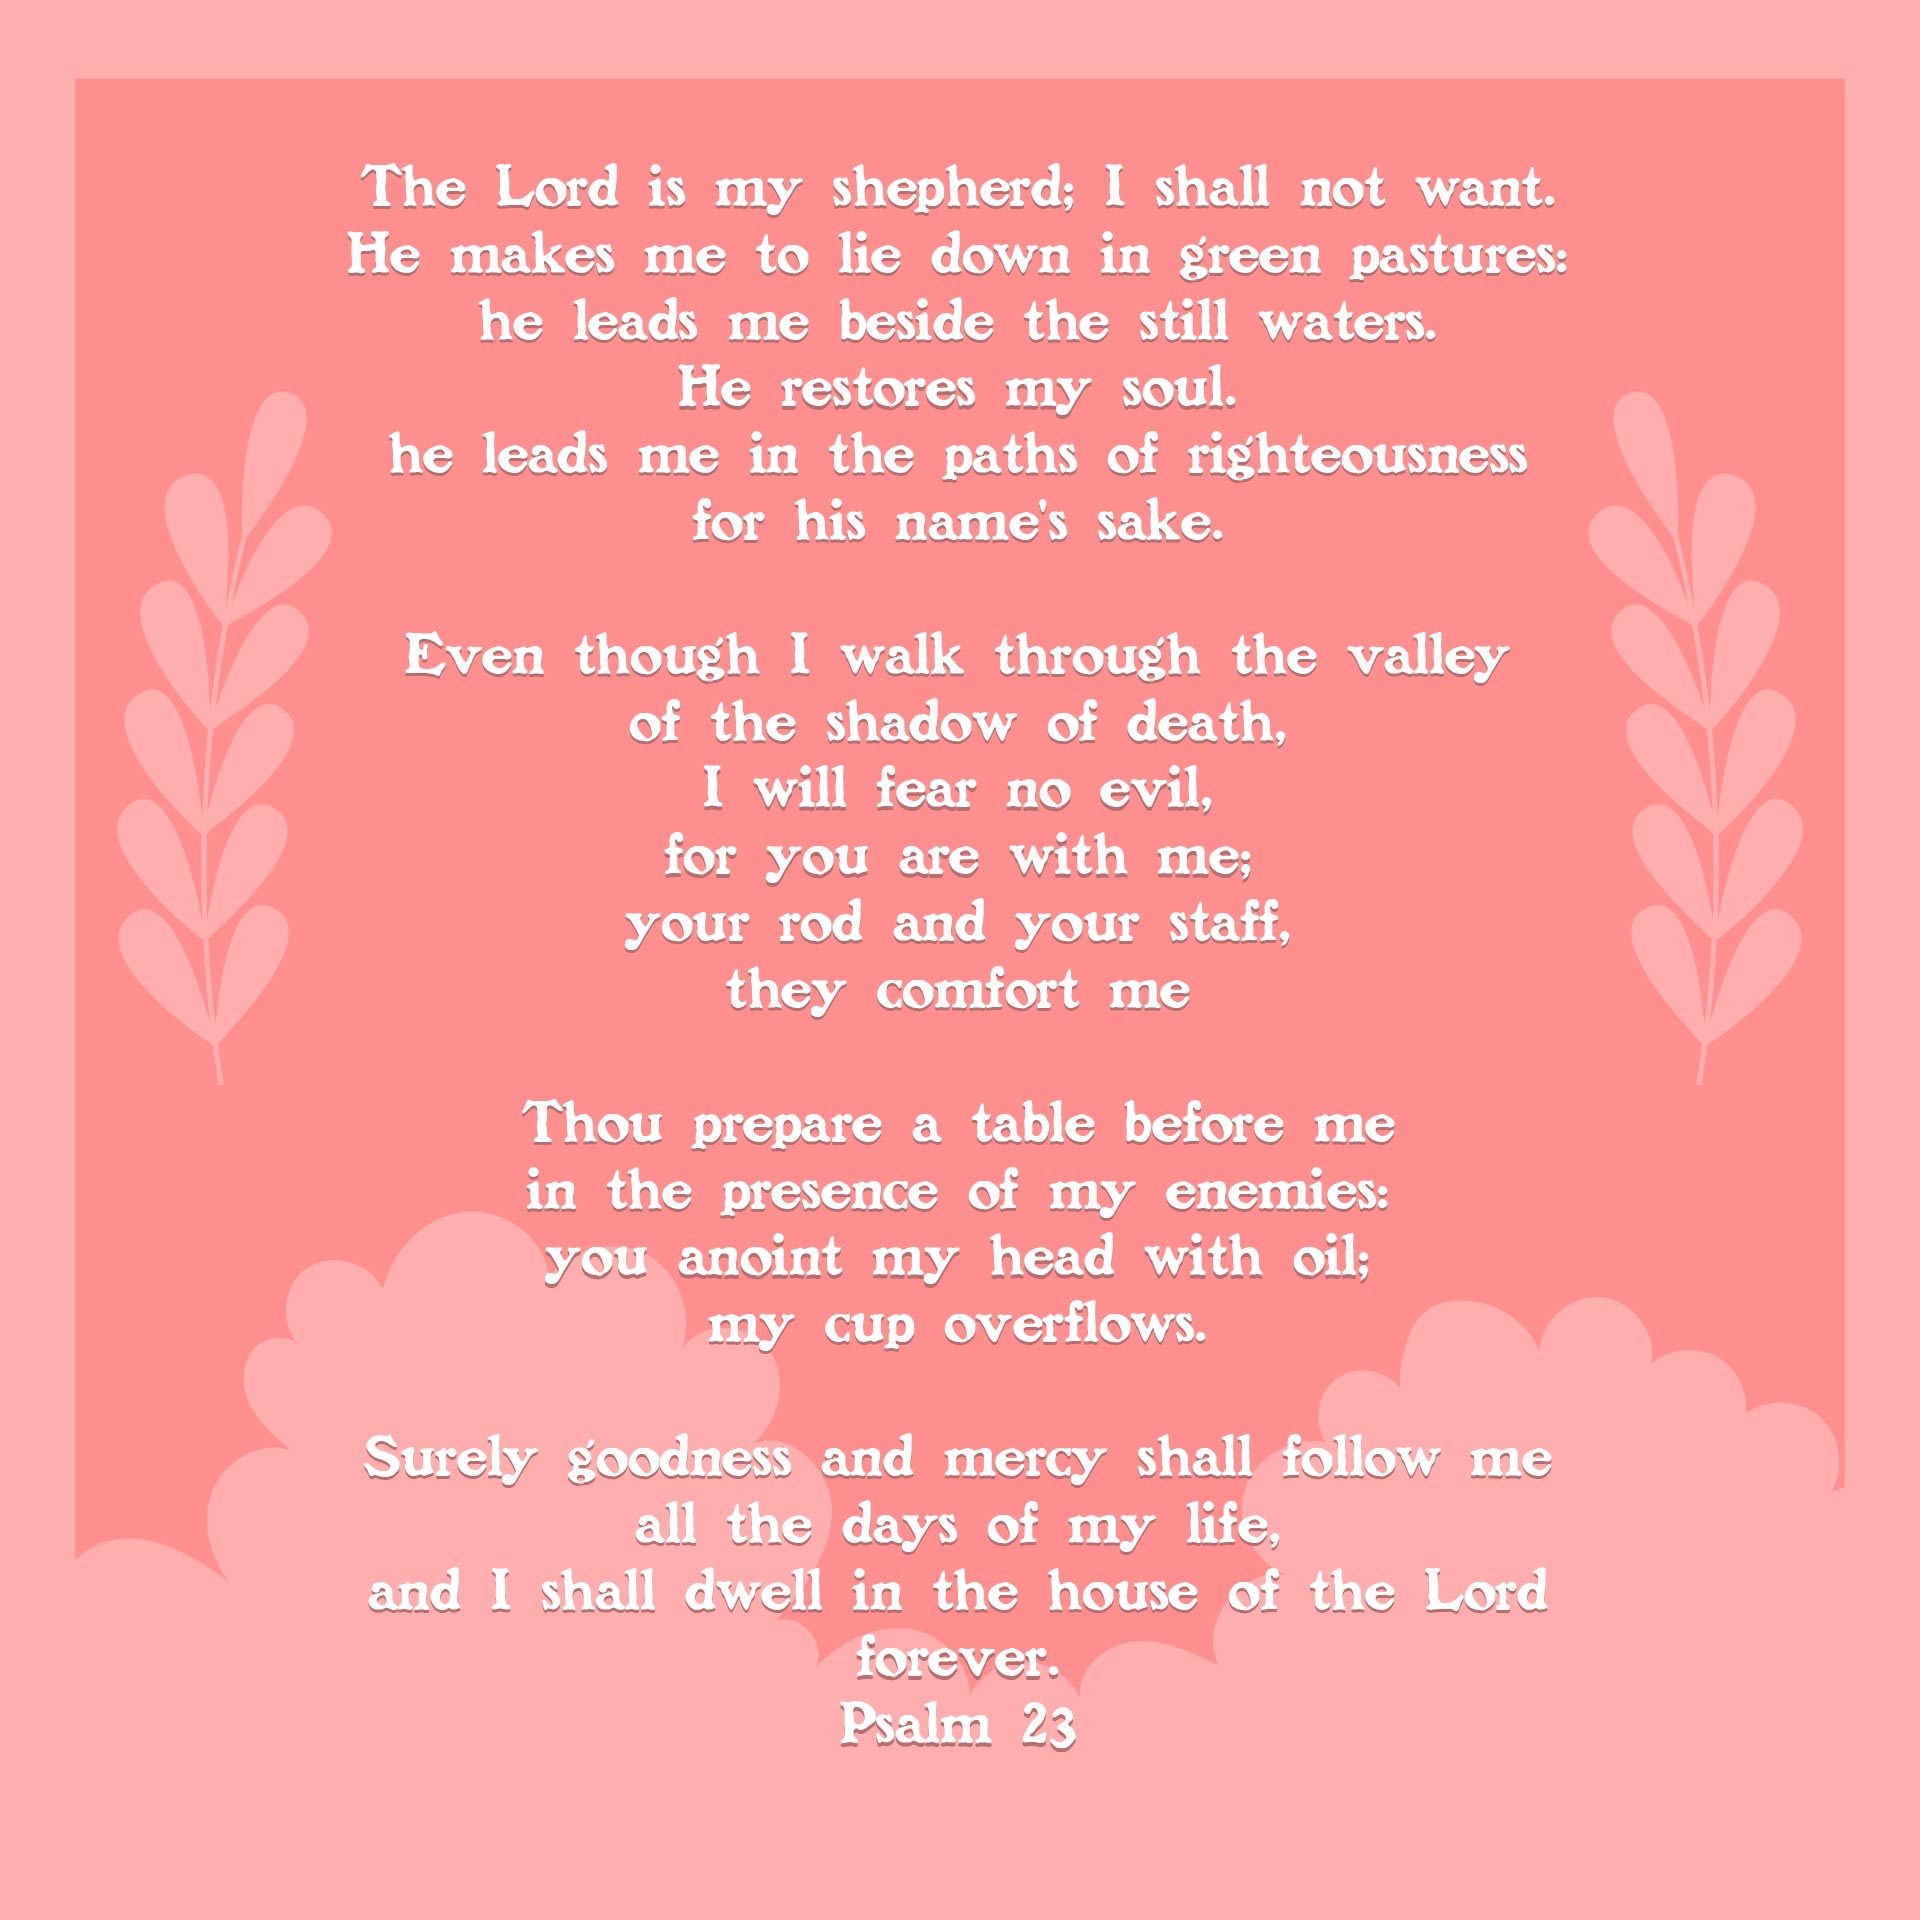 Psalm 23 as a Prayer